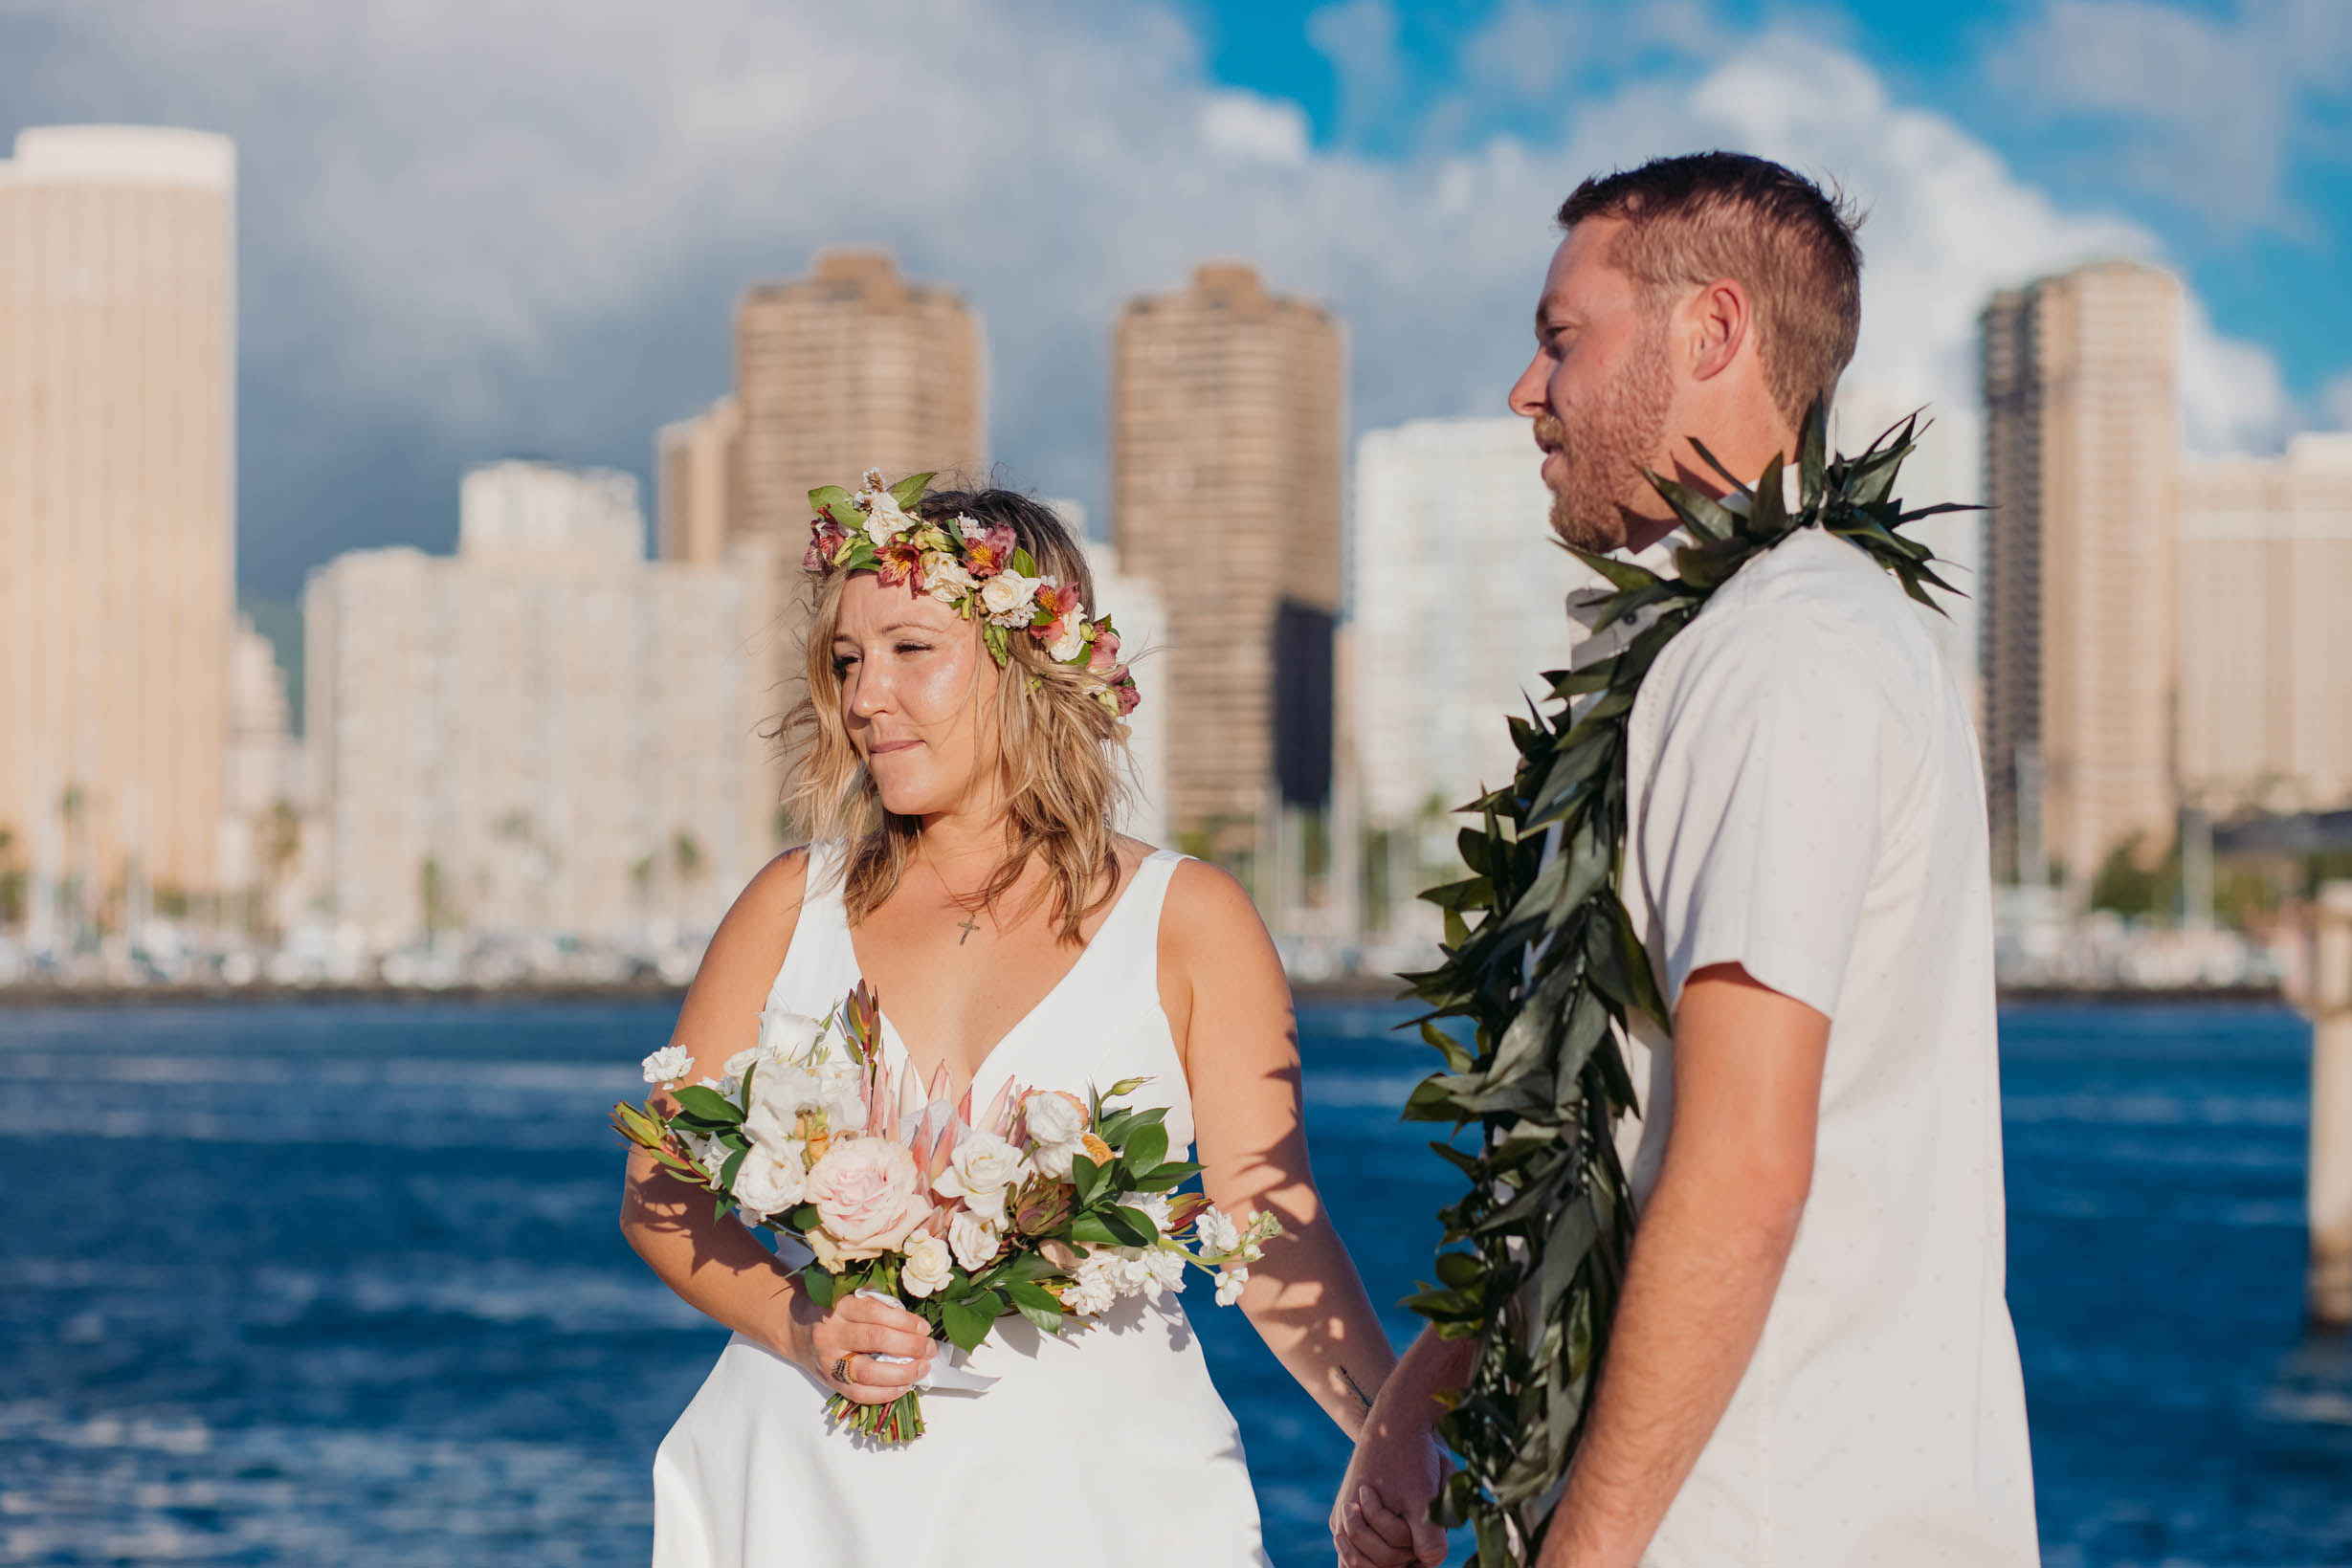 Magic Island Elopement - Hawaii Wedding Minister